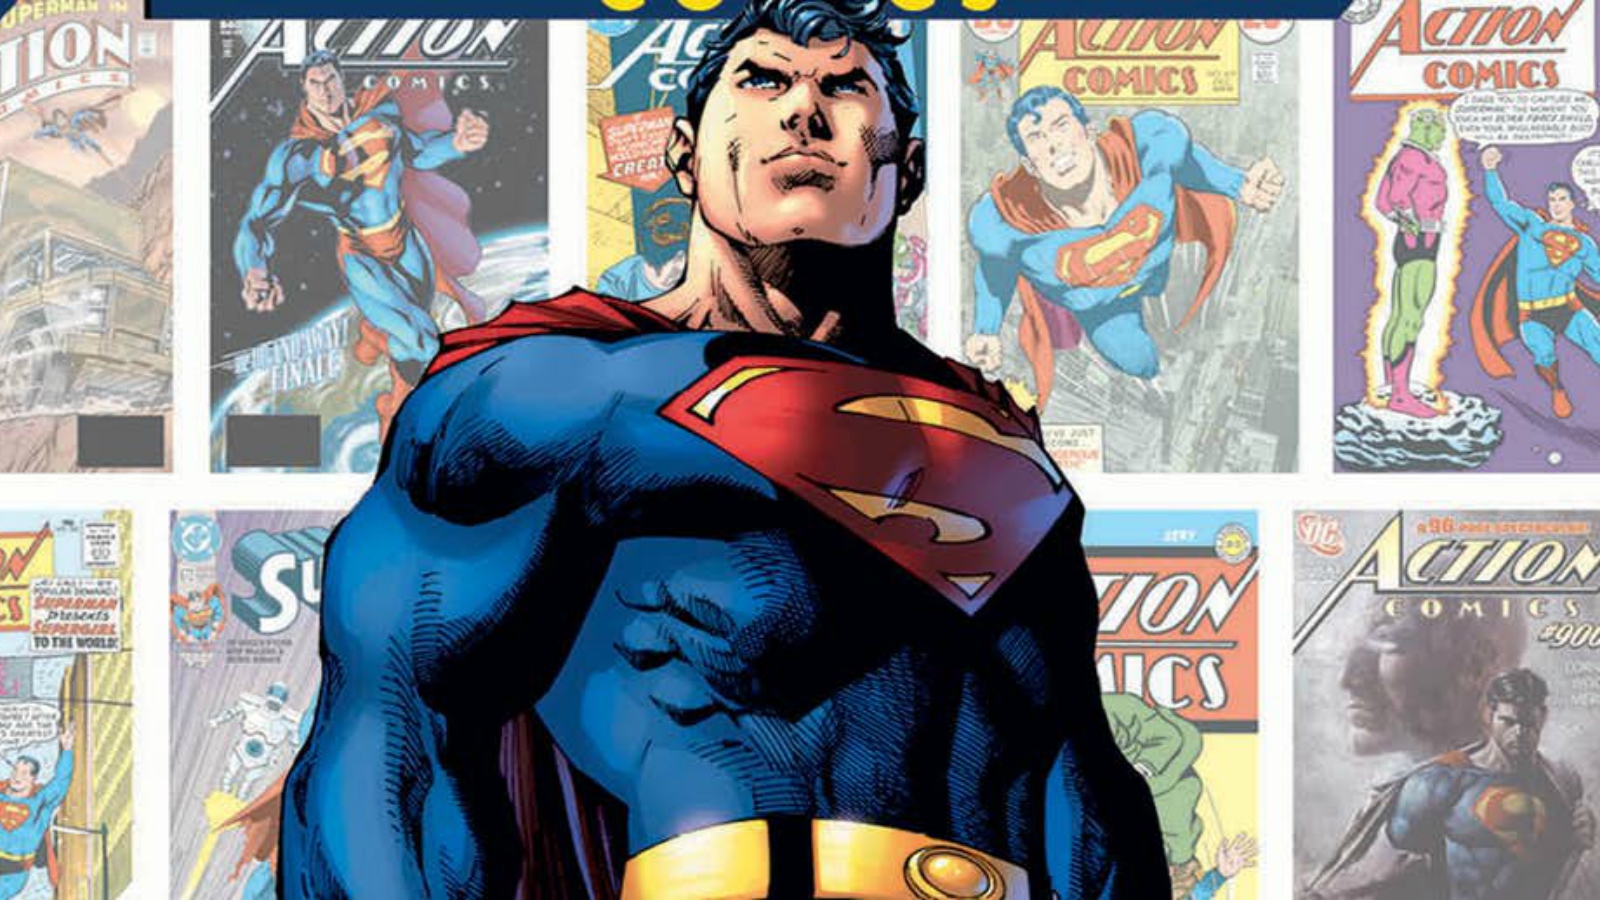 Jim Lee revela su portada variante para Action Comics #1000